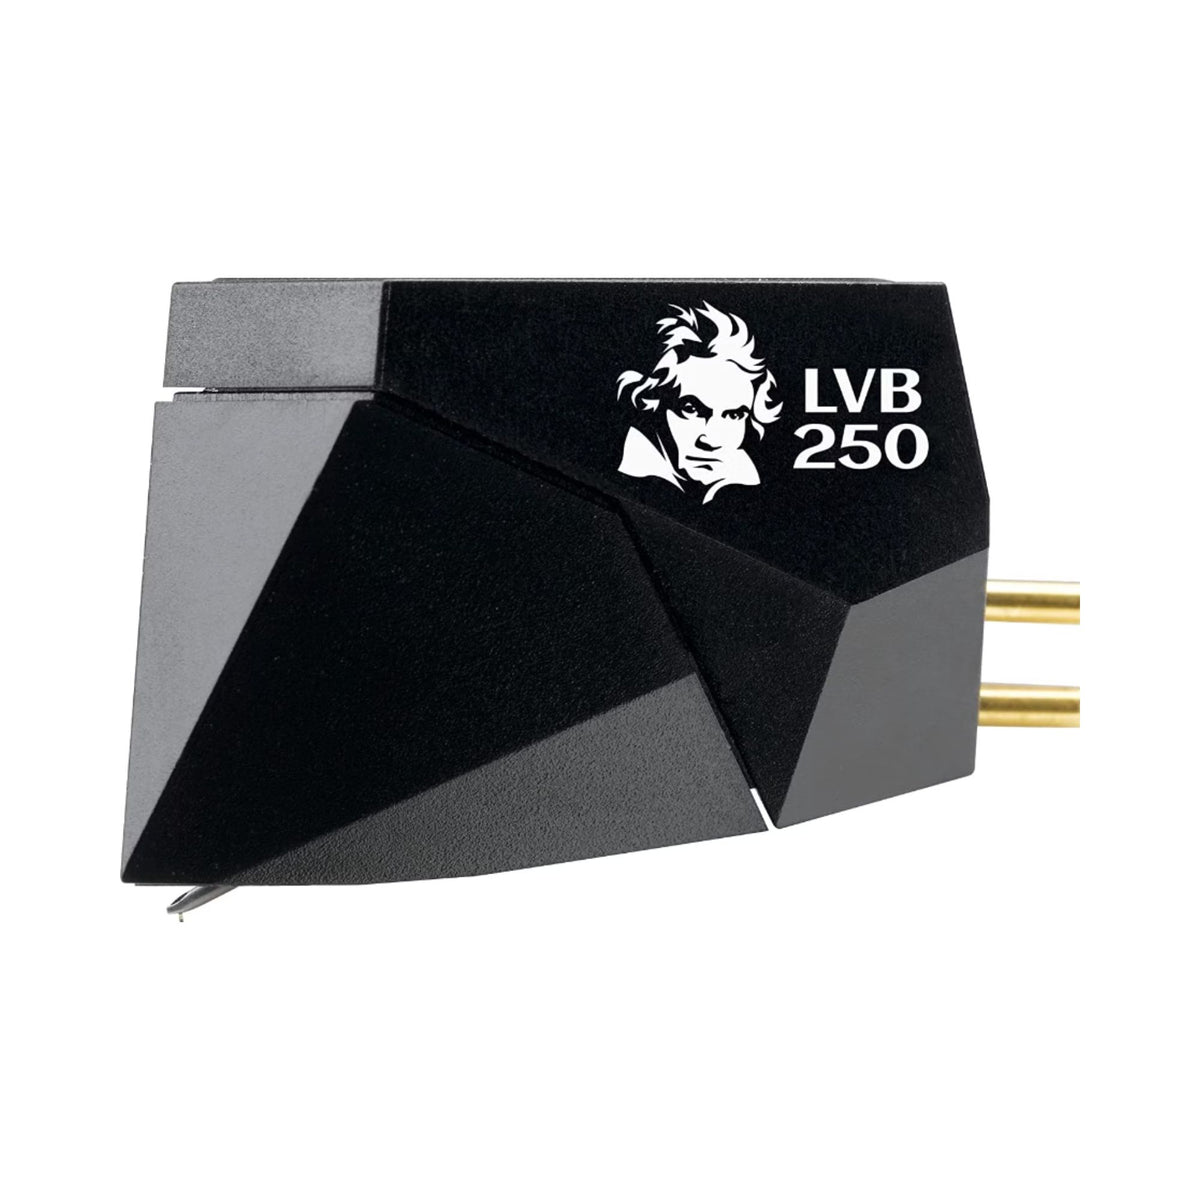 Ortofon 2M Black LVB 250 - Moving Magnet Cartridge, Ortofon, Turntable Accessories - AVStore.in